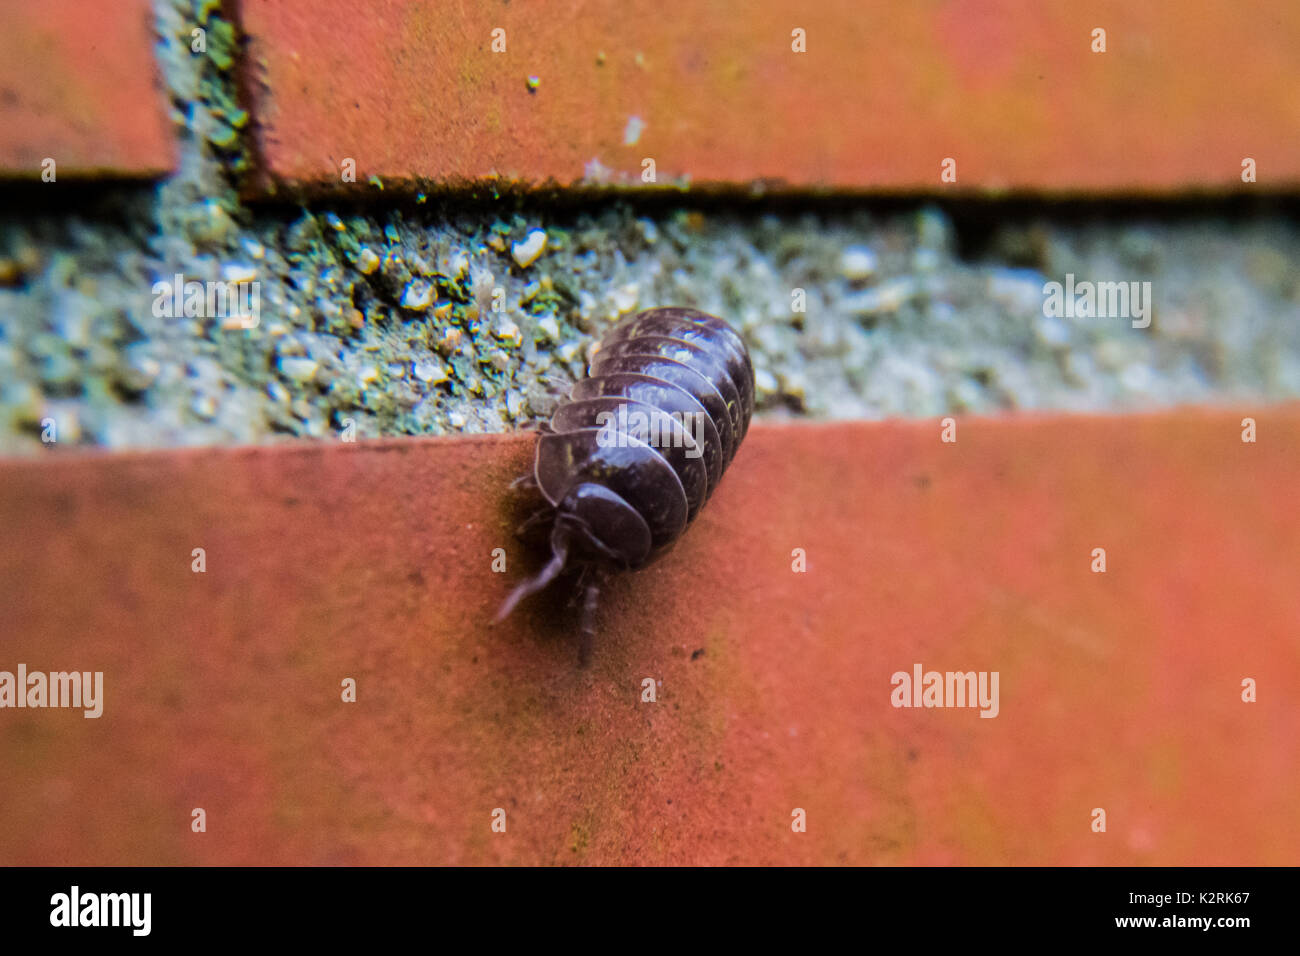 A Pill Bug On A Brick Garden Wall In Oiso Japan On A Rainy Day